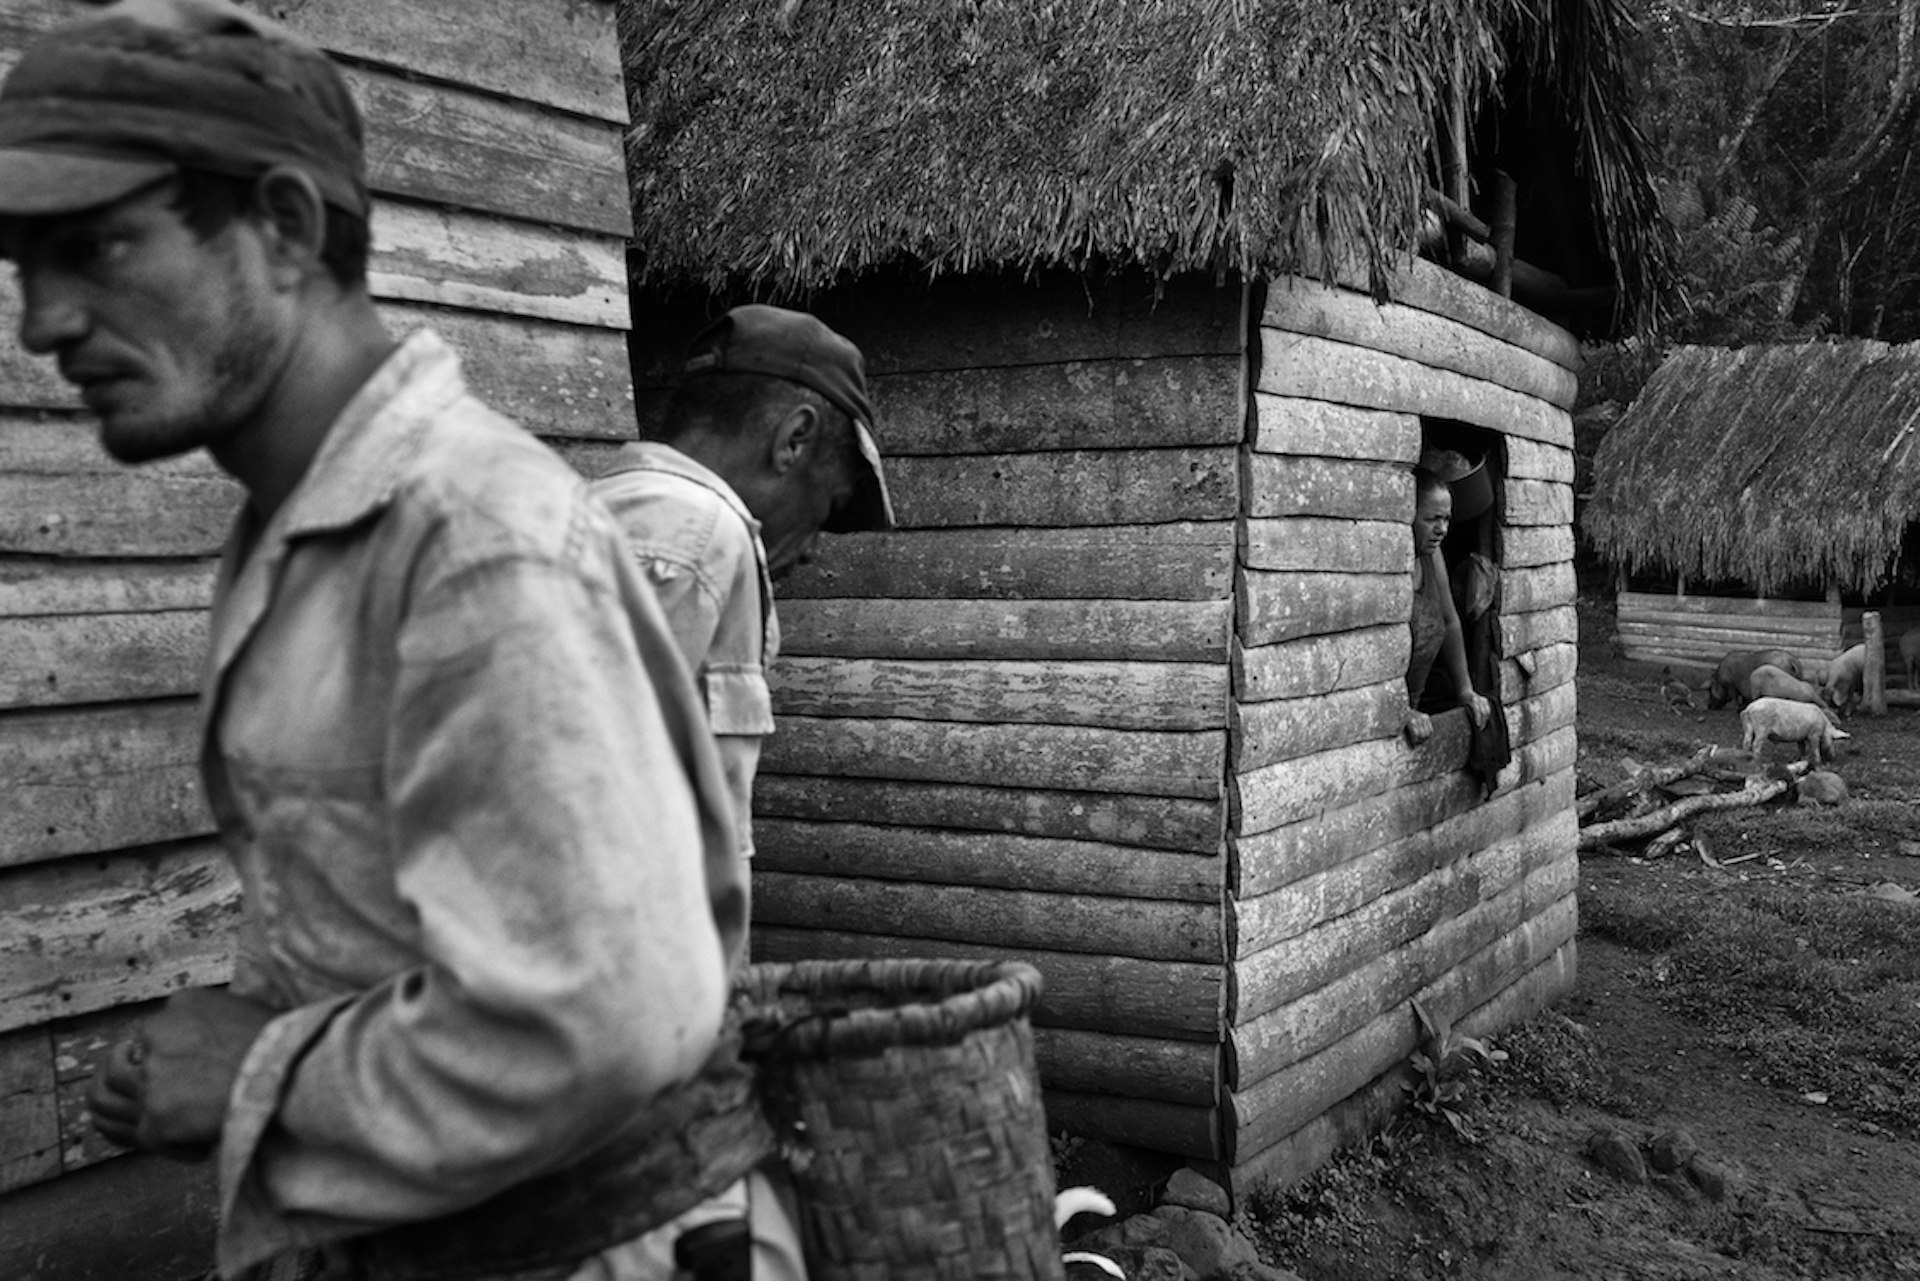 An evocative portrait of Cuba’s agricultural communities